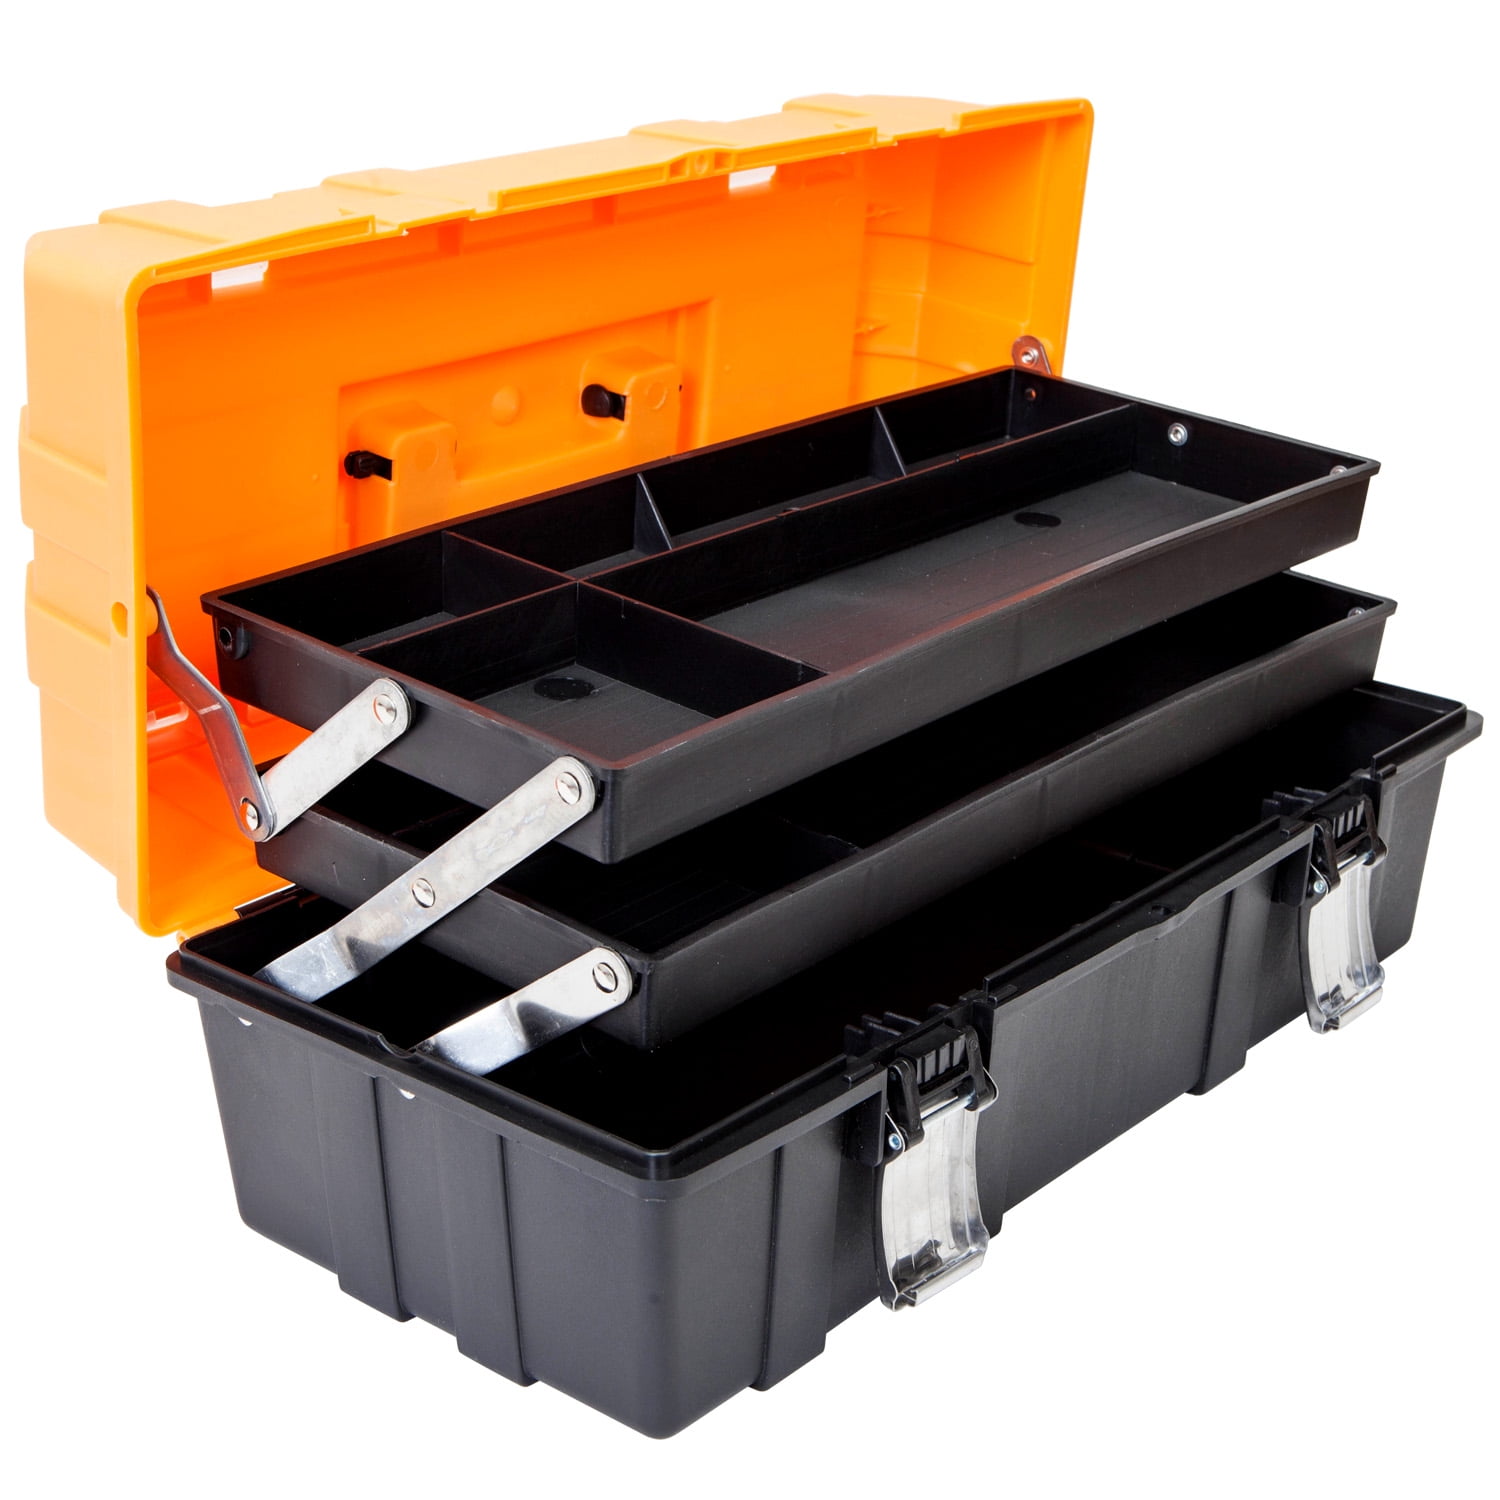 3x Duratool Organiser Compartment Tool Tray Storage Box Adjustable 3PCS 